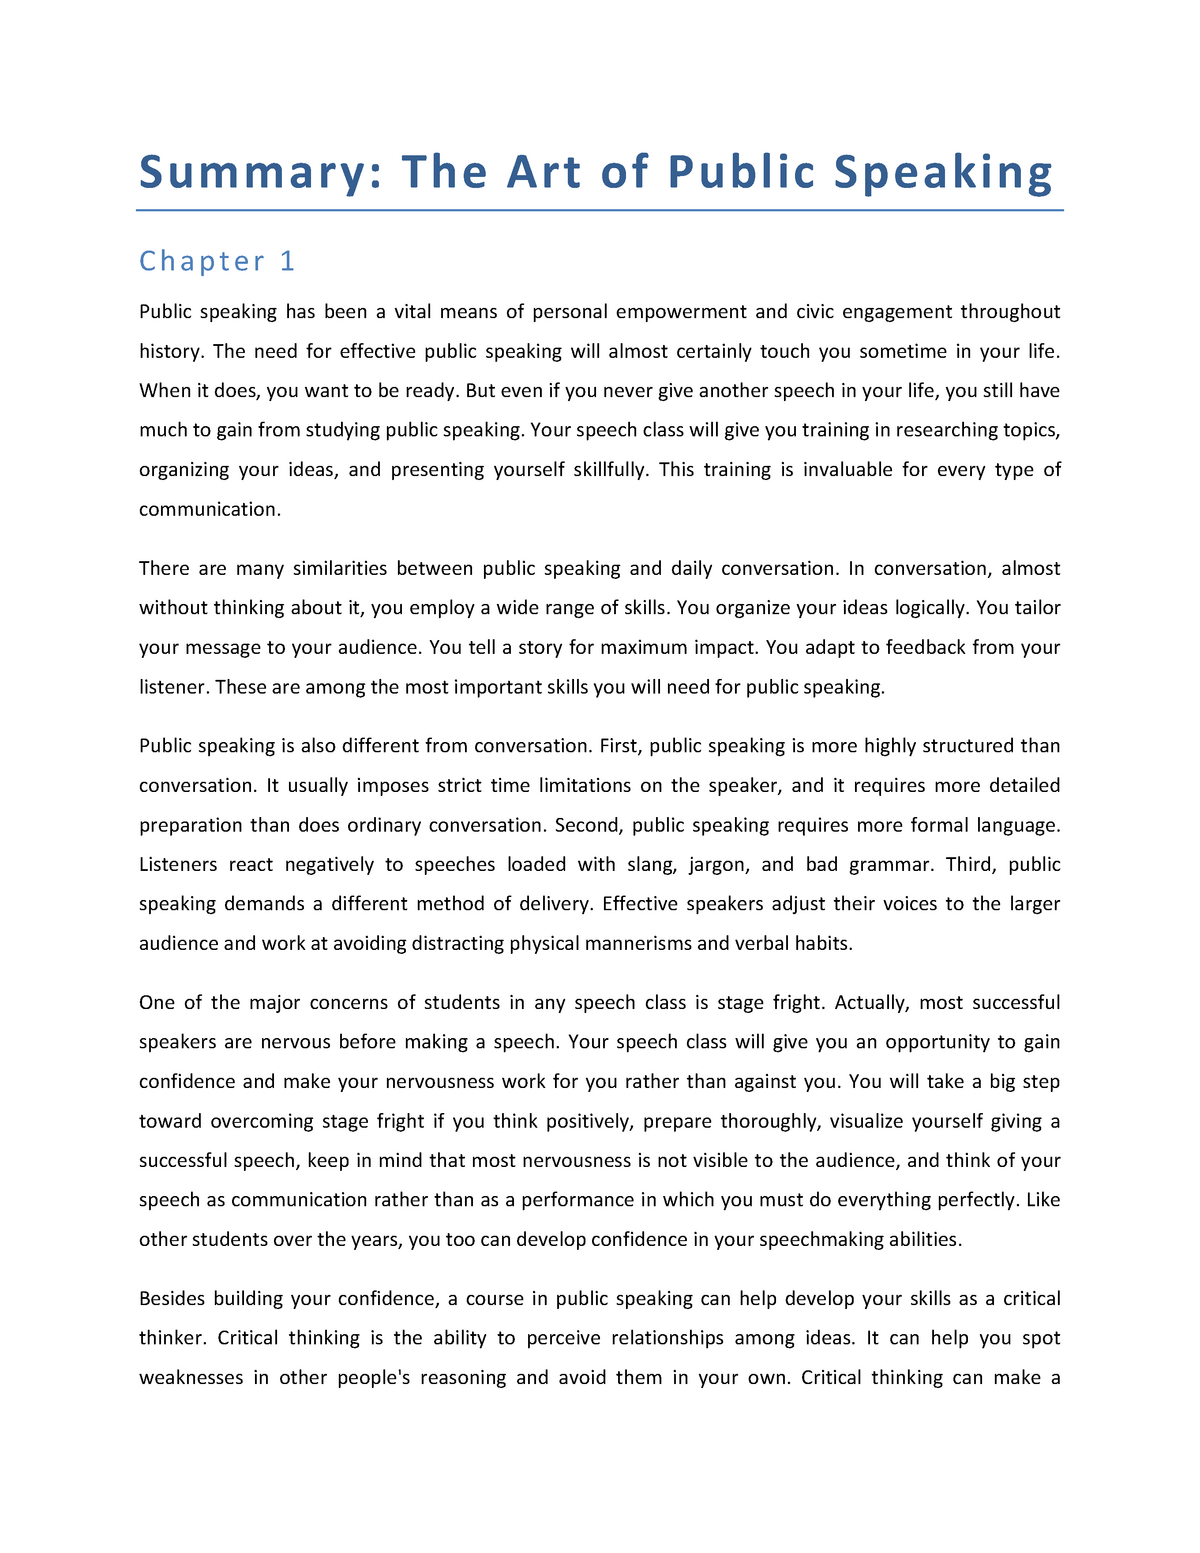 essay on art of speaking